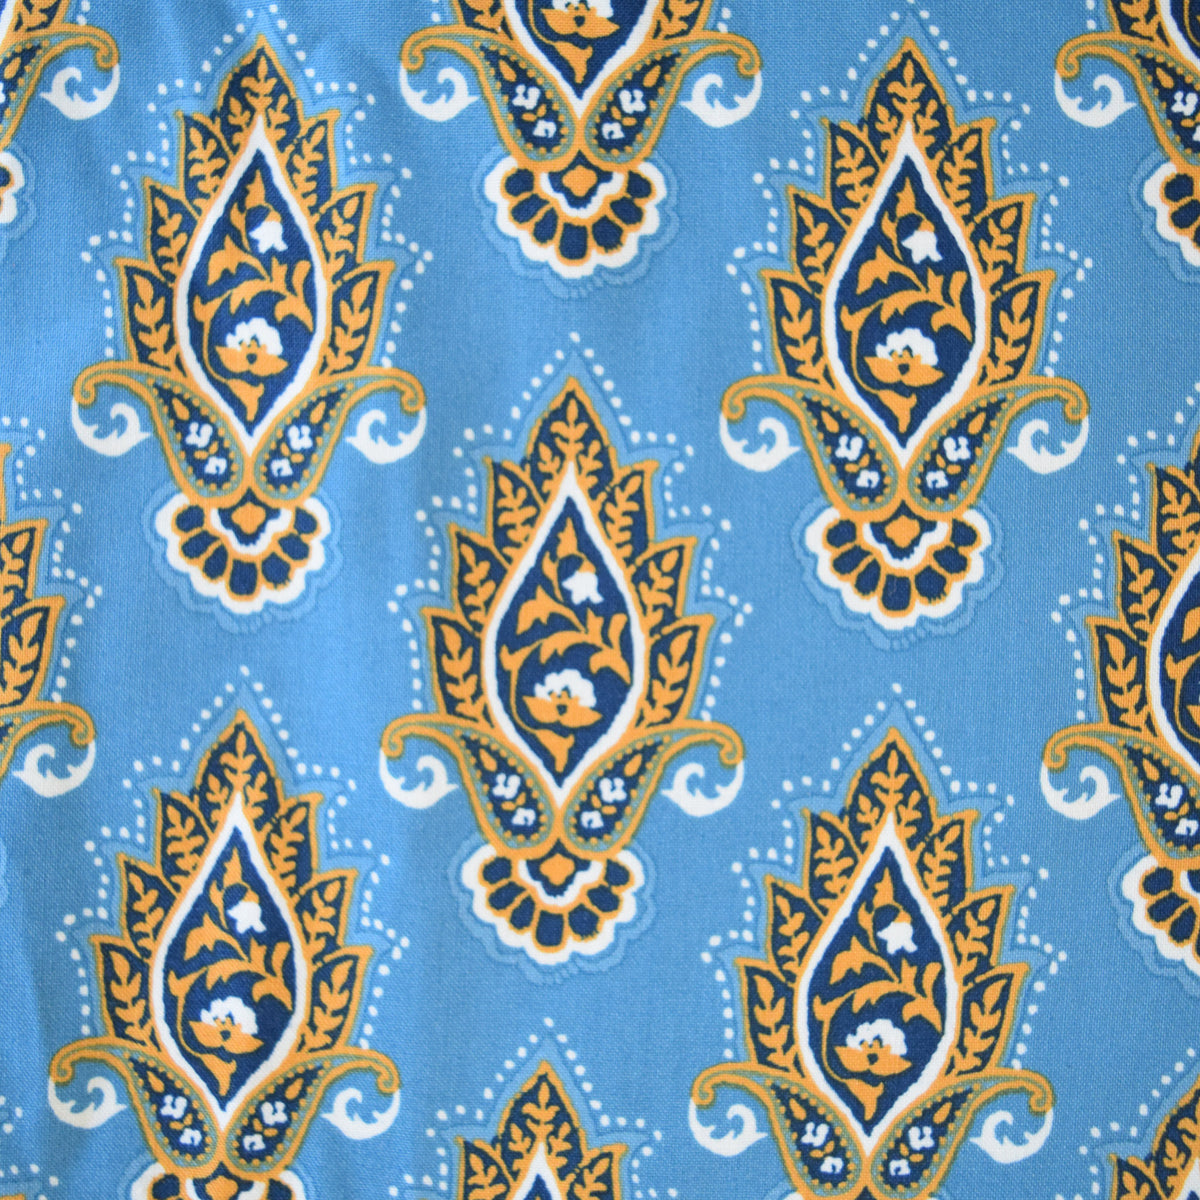 Casserole Dish Covers - Indian Block Print Blue